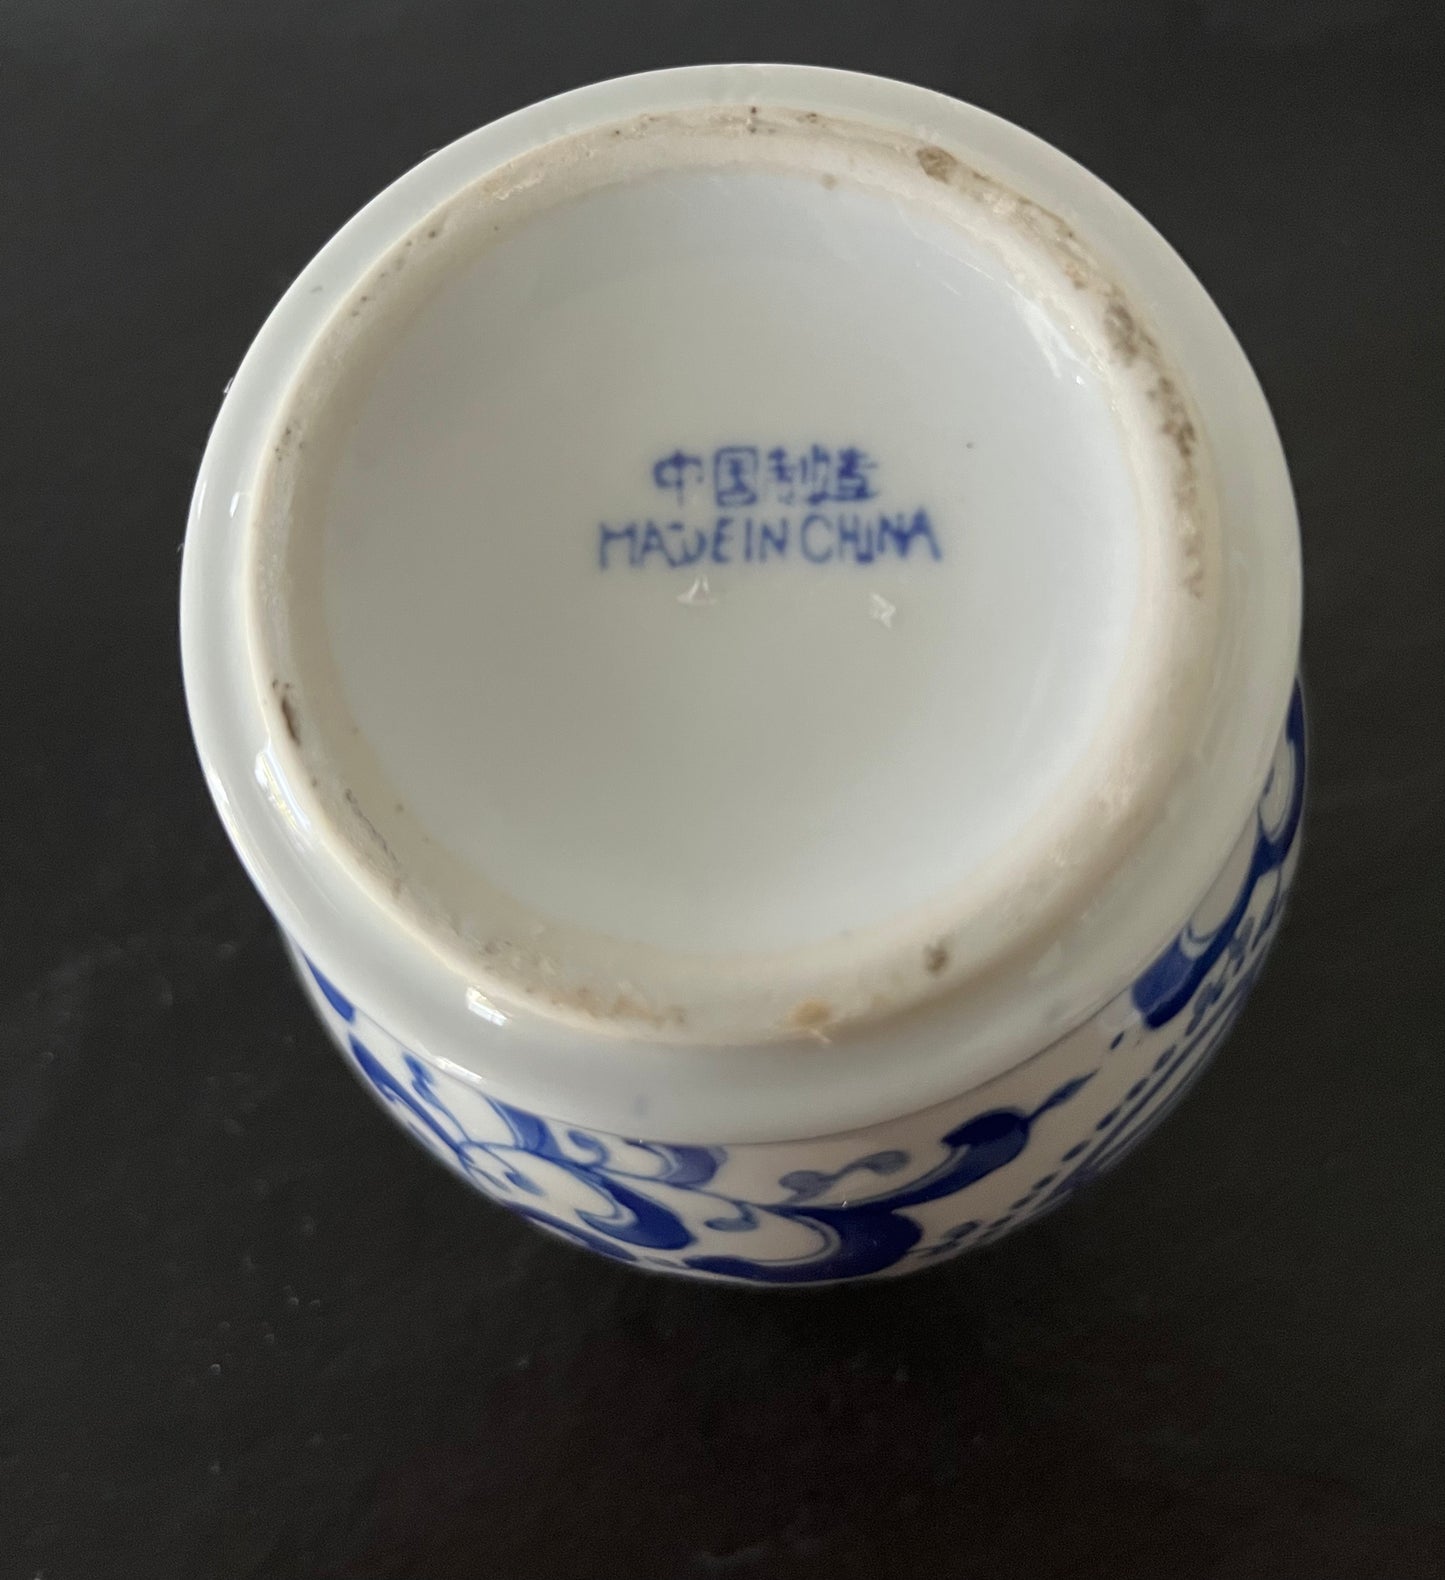 Vintage Hand-Painted Blue and White Qinghua Porcelain Ginger Jar with Floral Motif - 8" High, 4" Diameter, 1 lb 5.5 oz